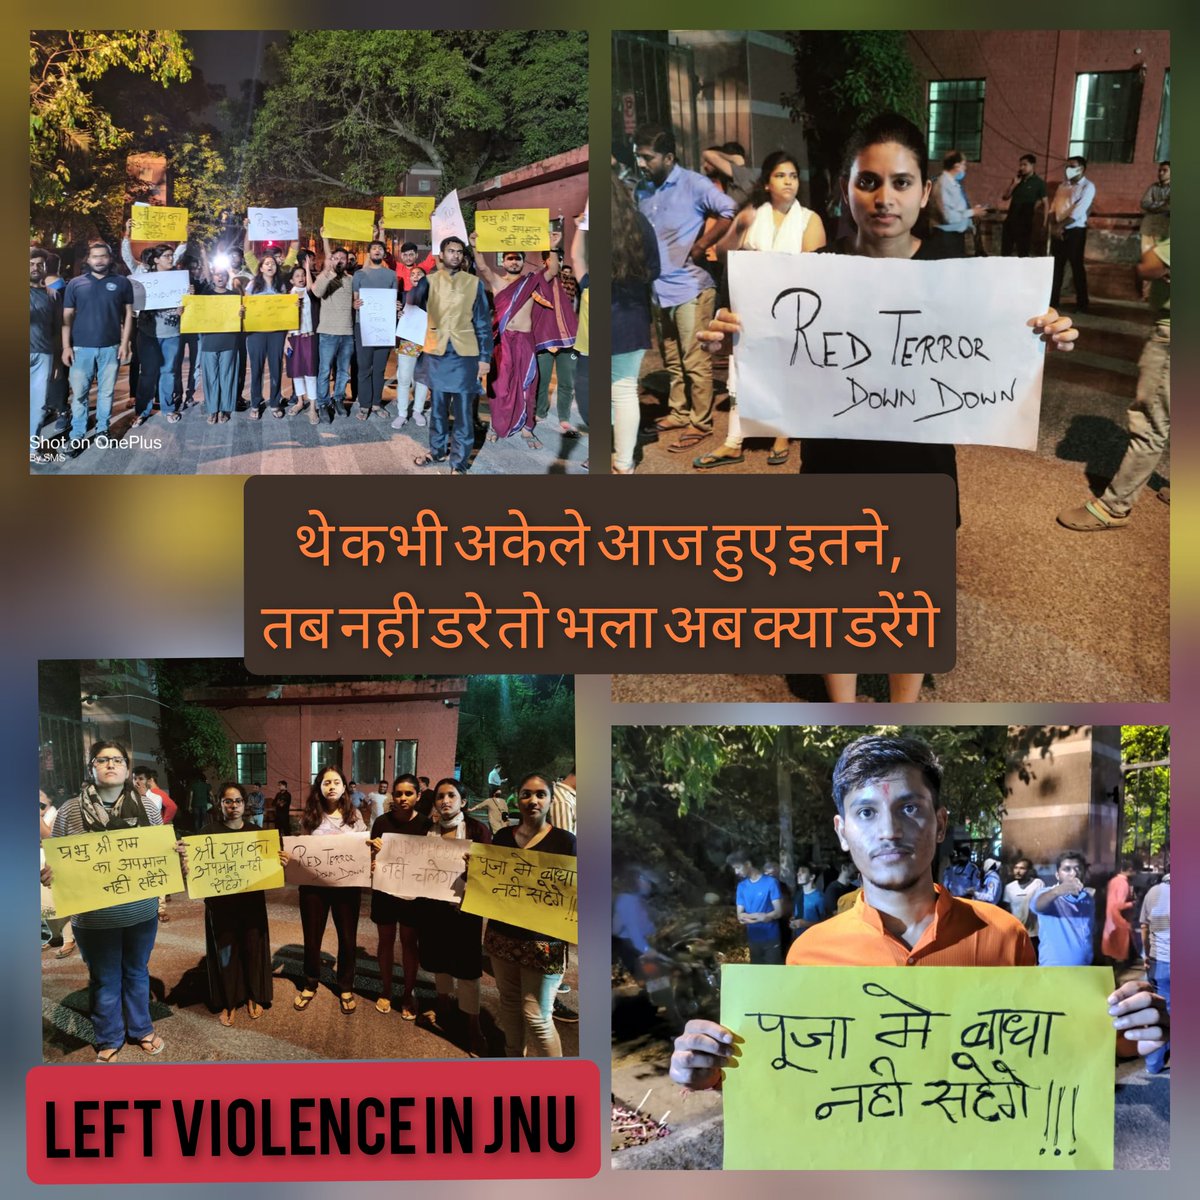 JNU students march within JNU campus against Communist's violence over student community.
#LeftViolenceInJNU